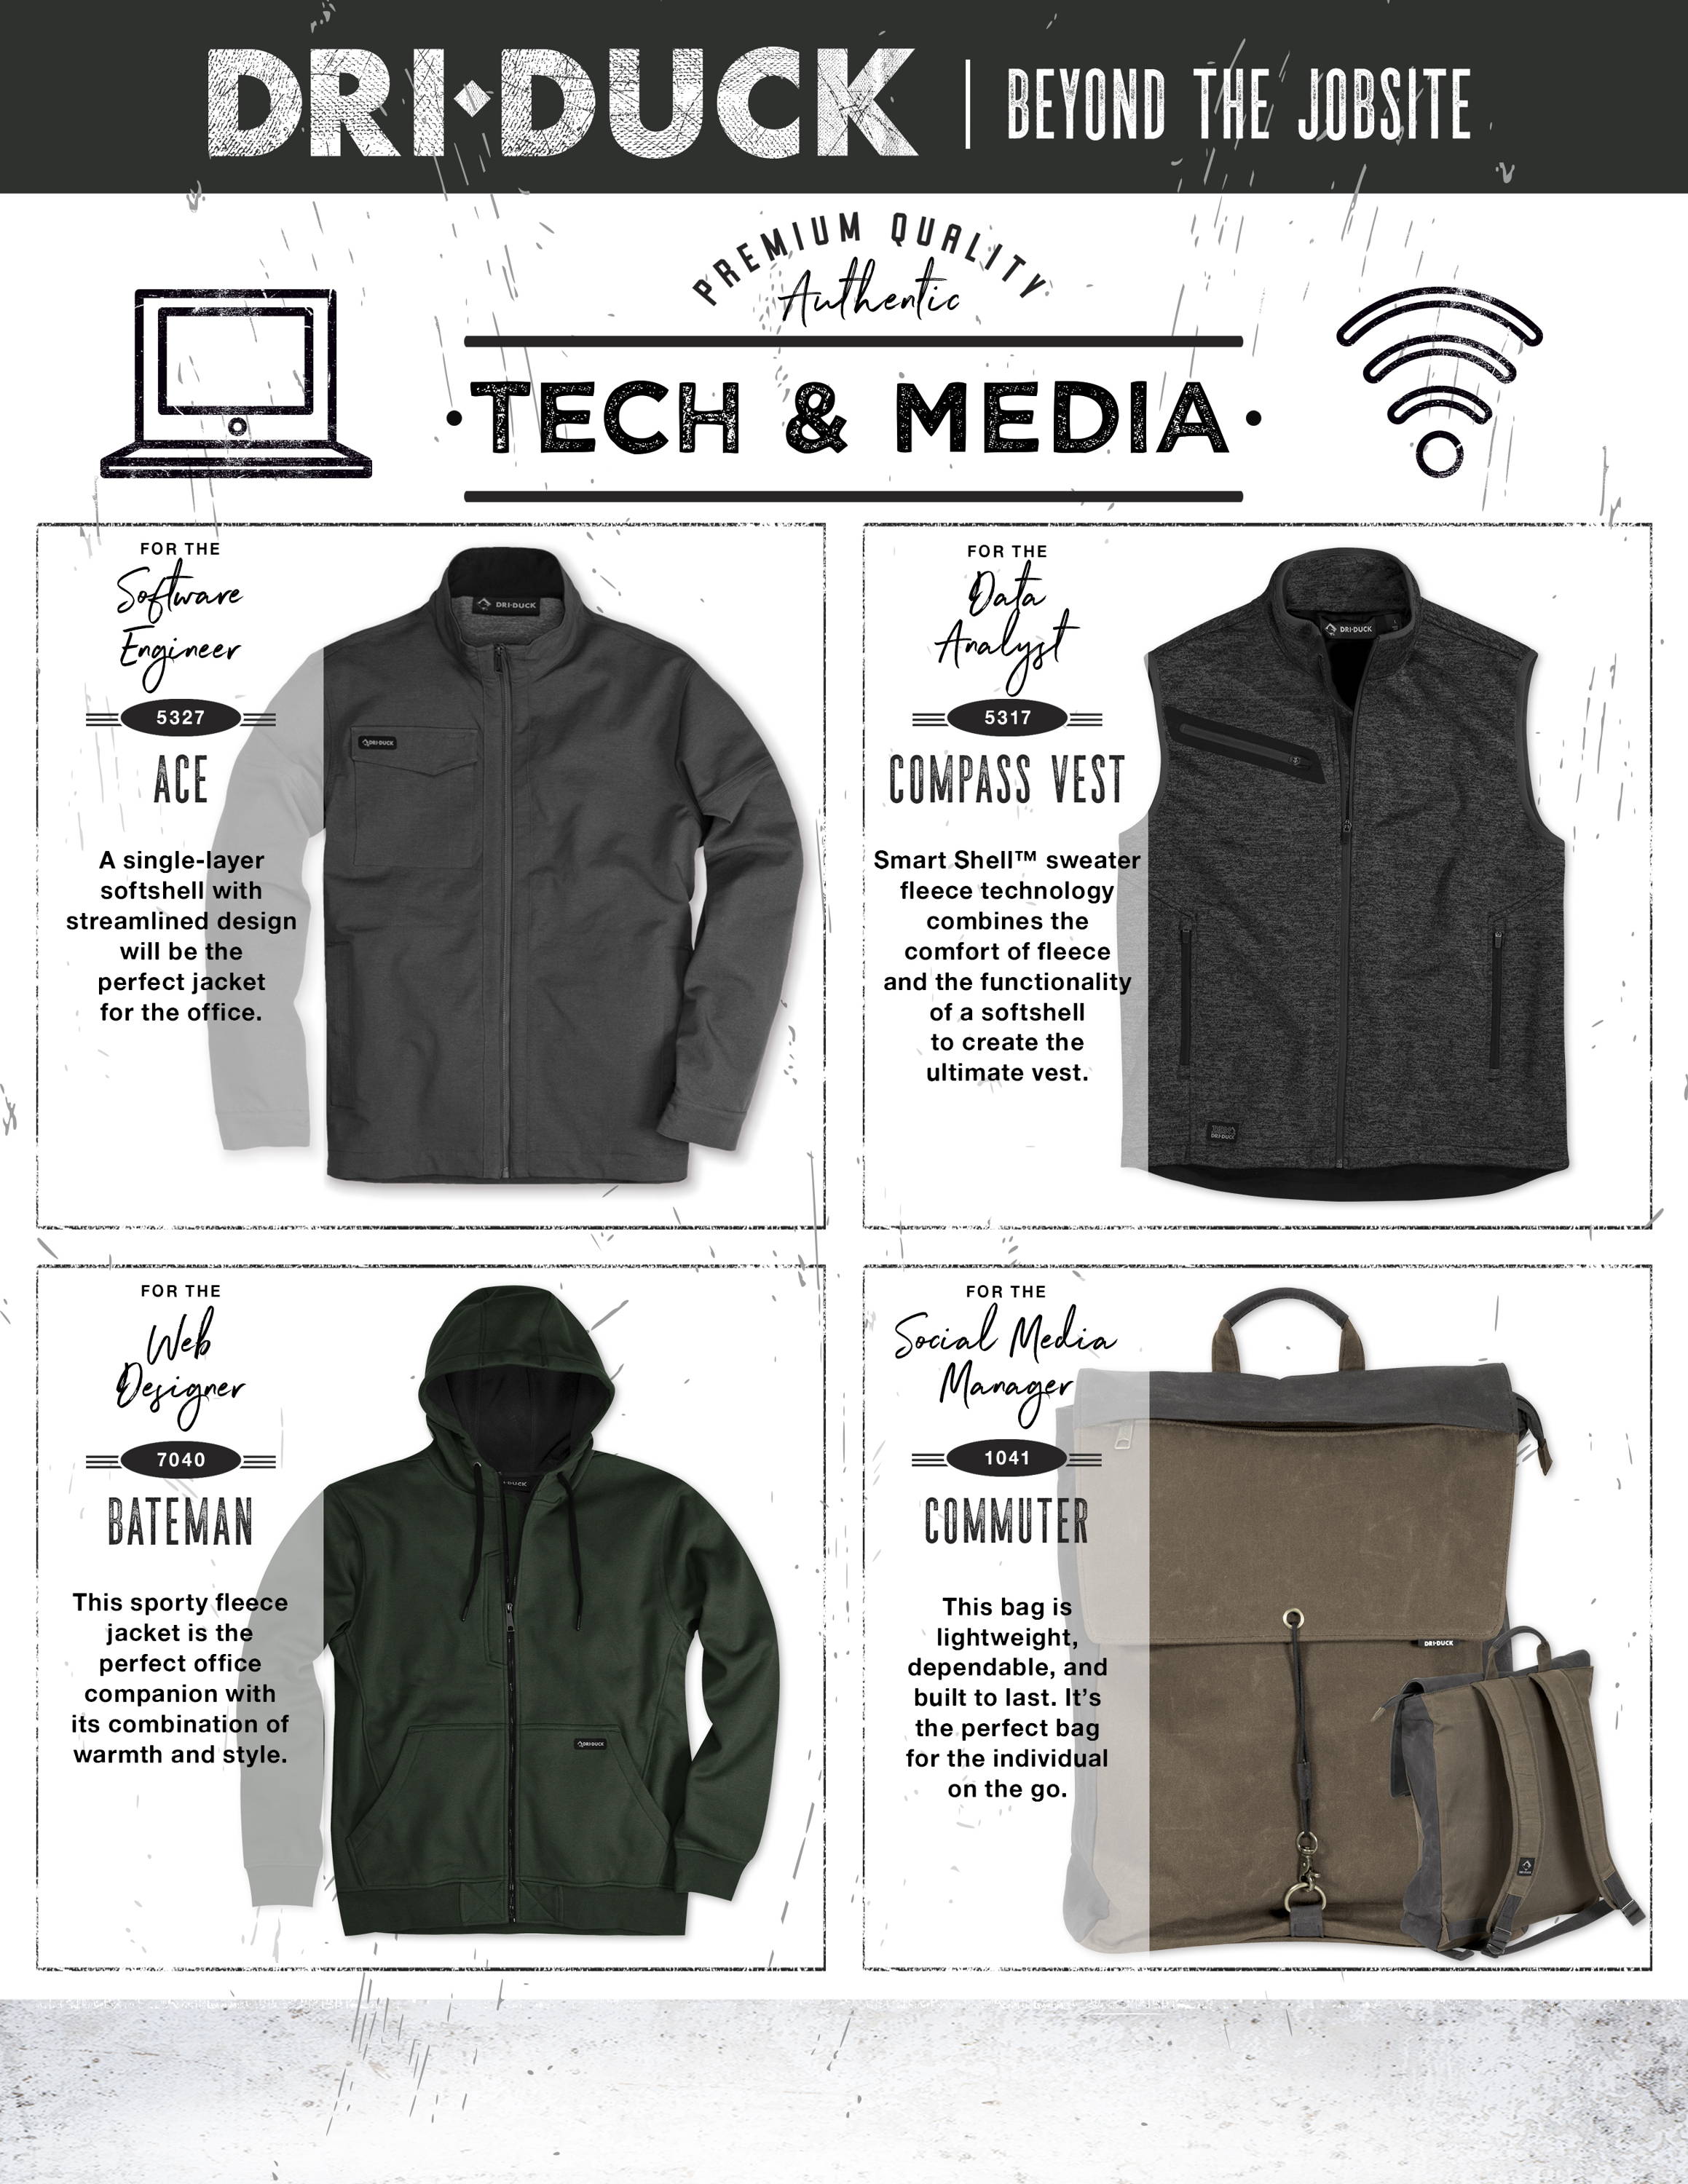 Workwear for tech media jobs by DRI DUCK